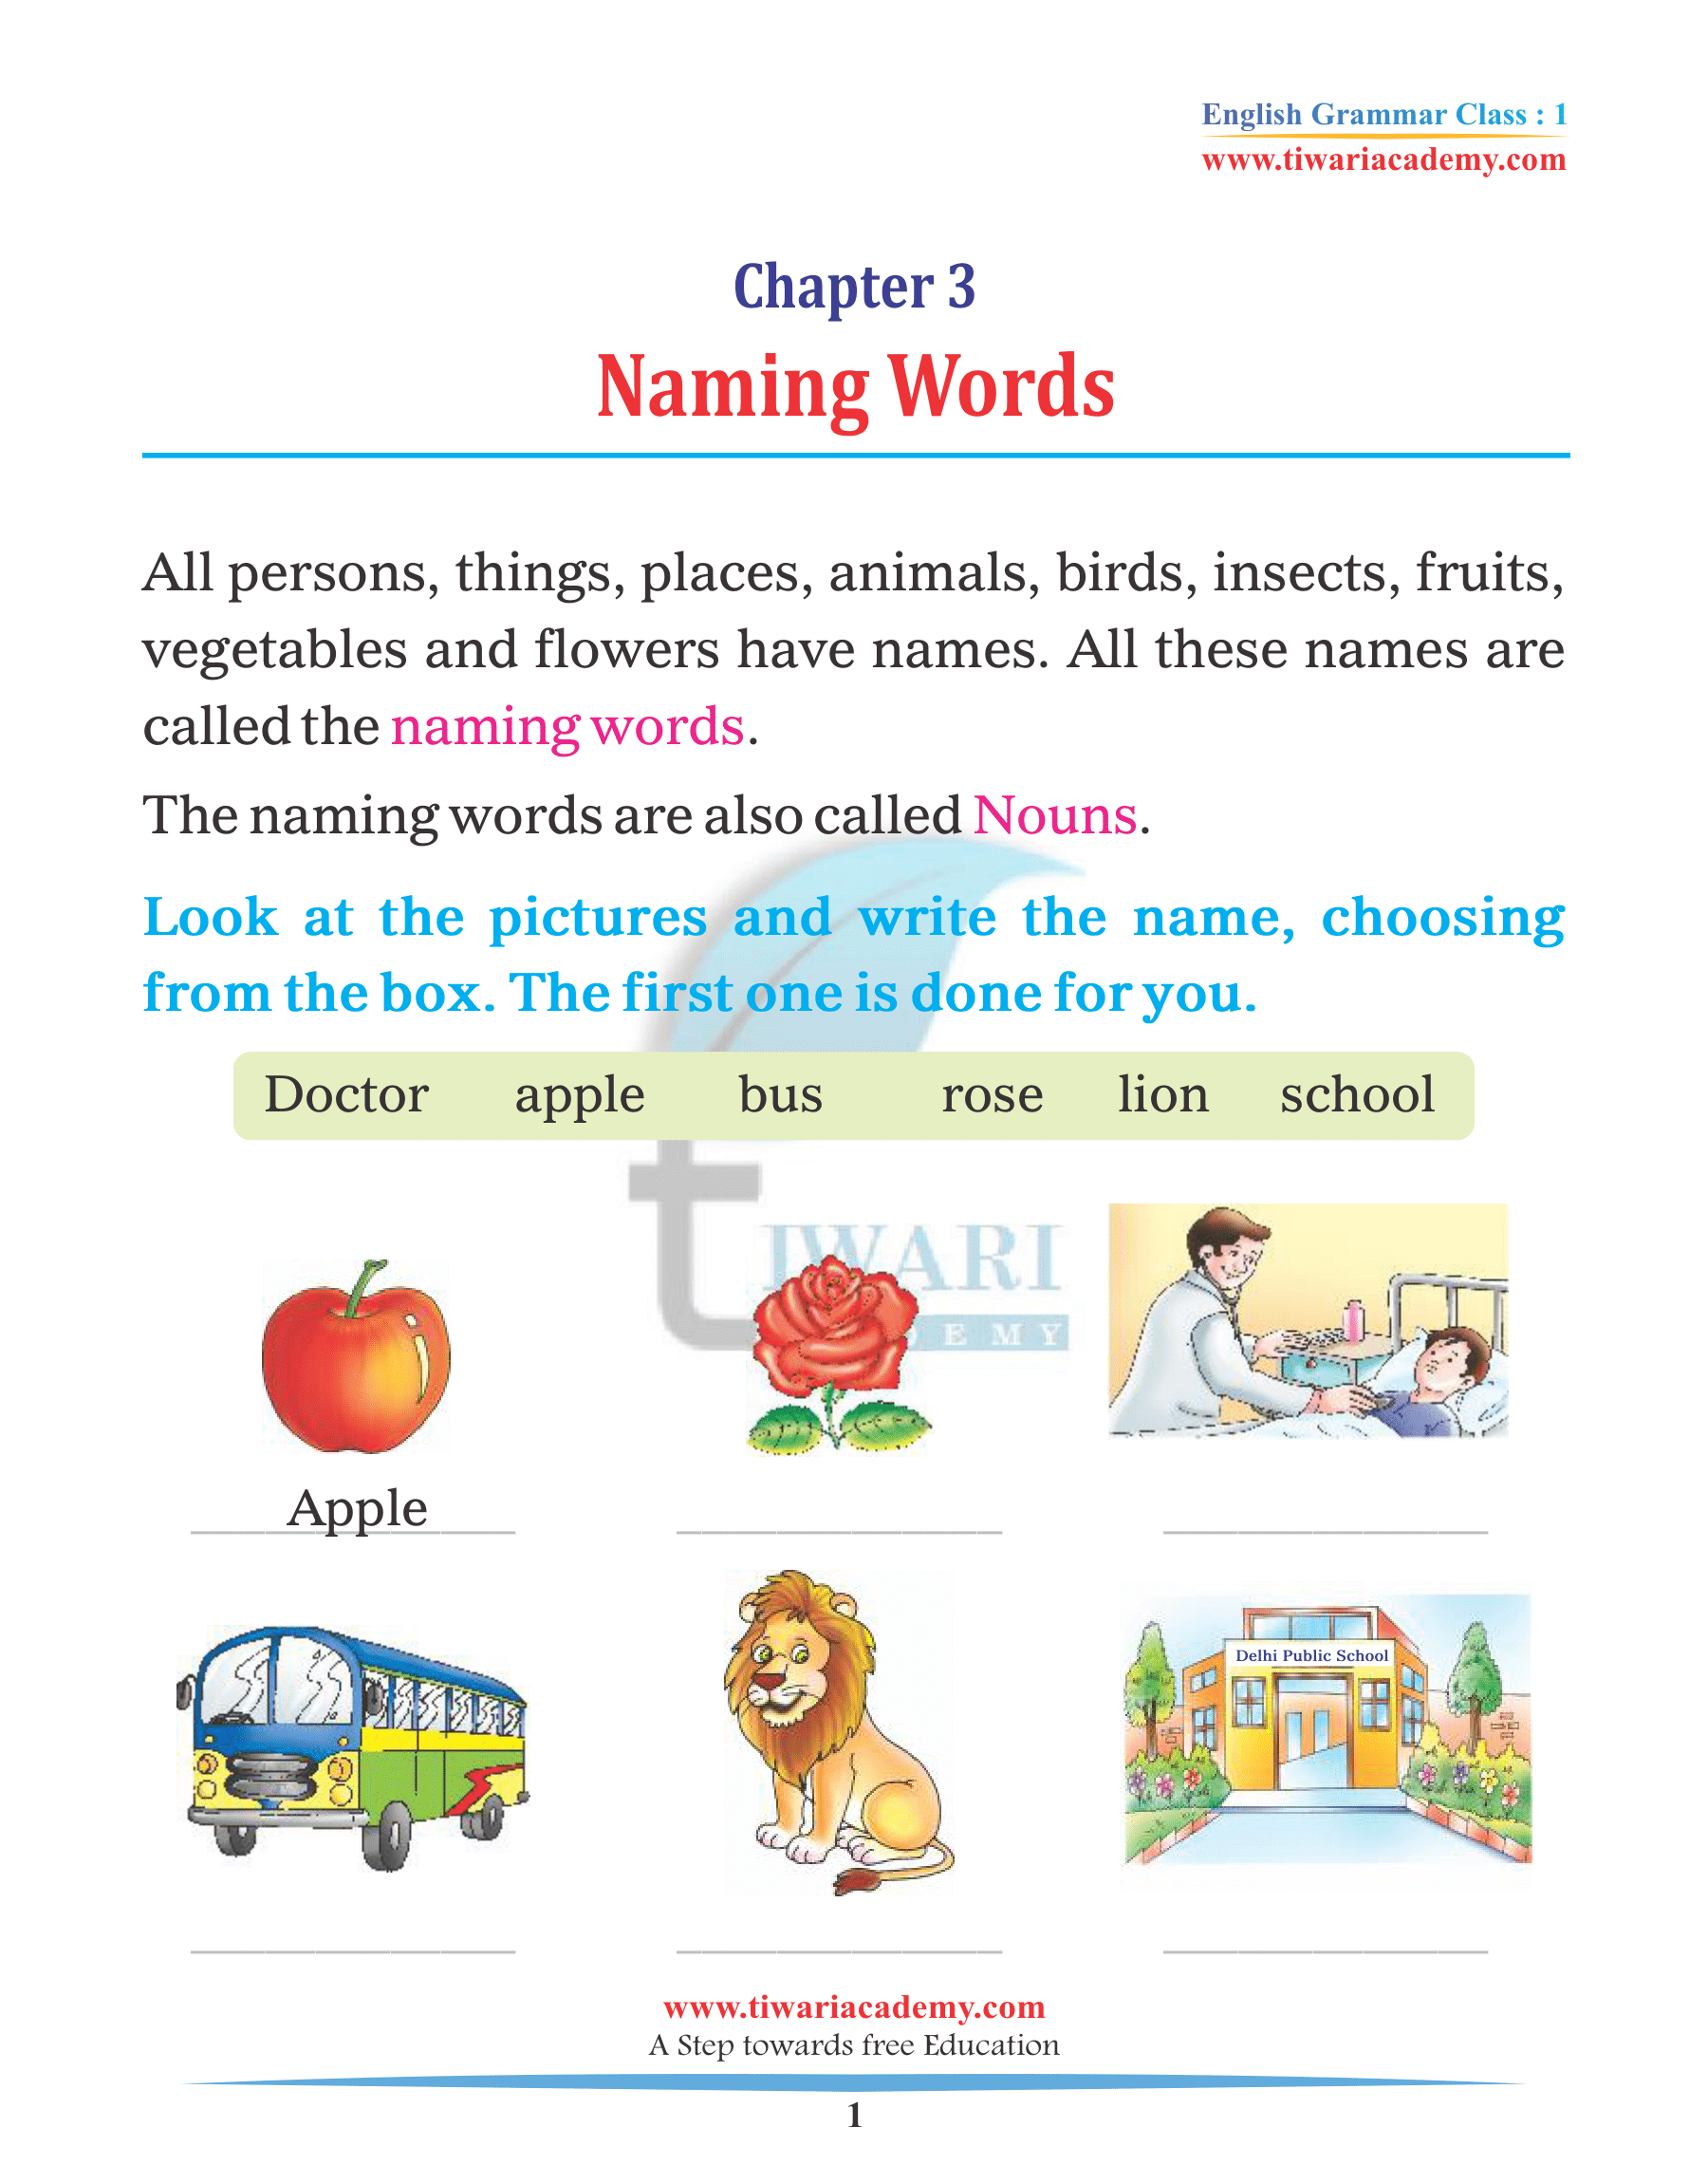 Class 1 English Grammar Chapter 3 Naming Words, types of Noun Examples